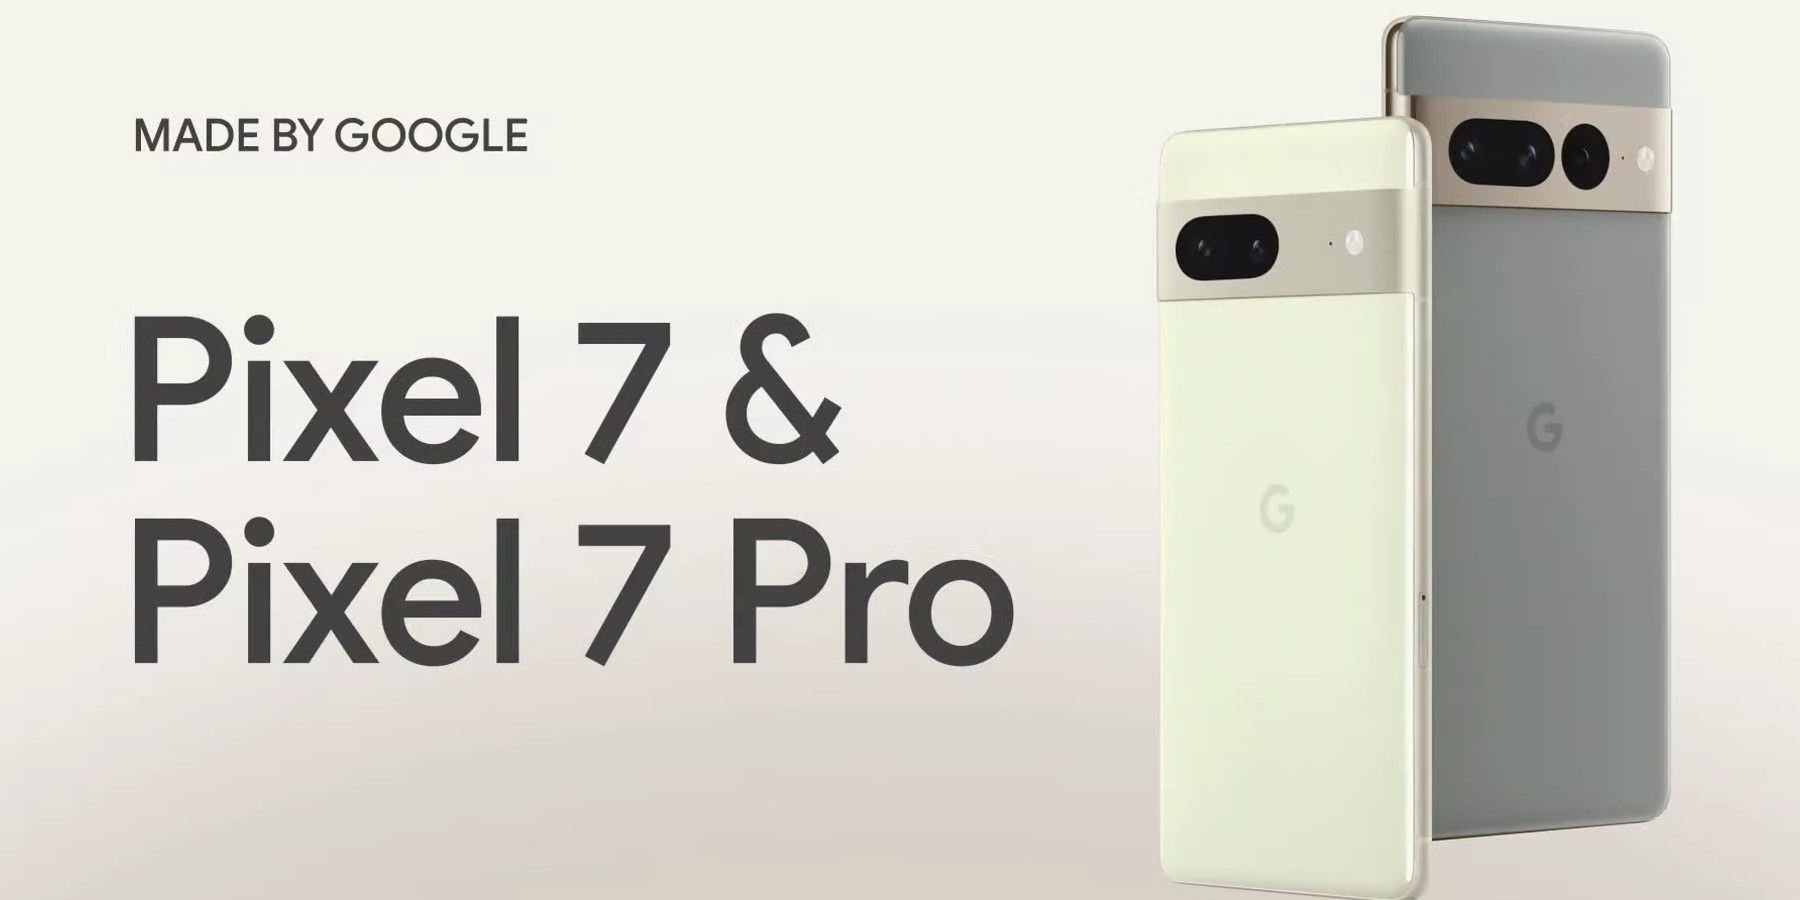 Pixel 7 and Pixel 7 Pro